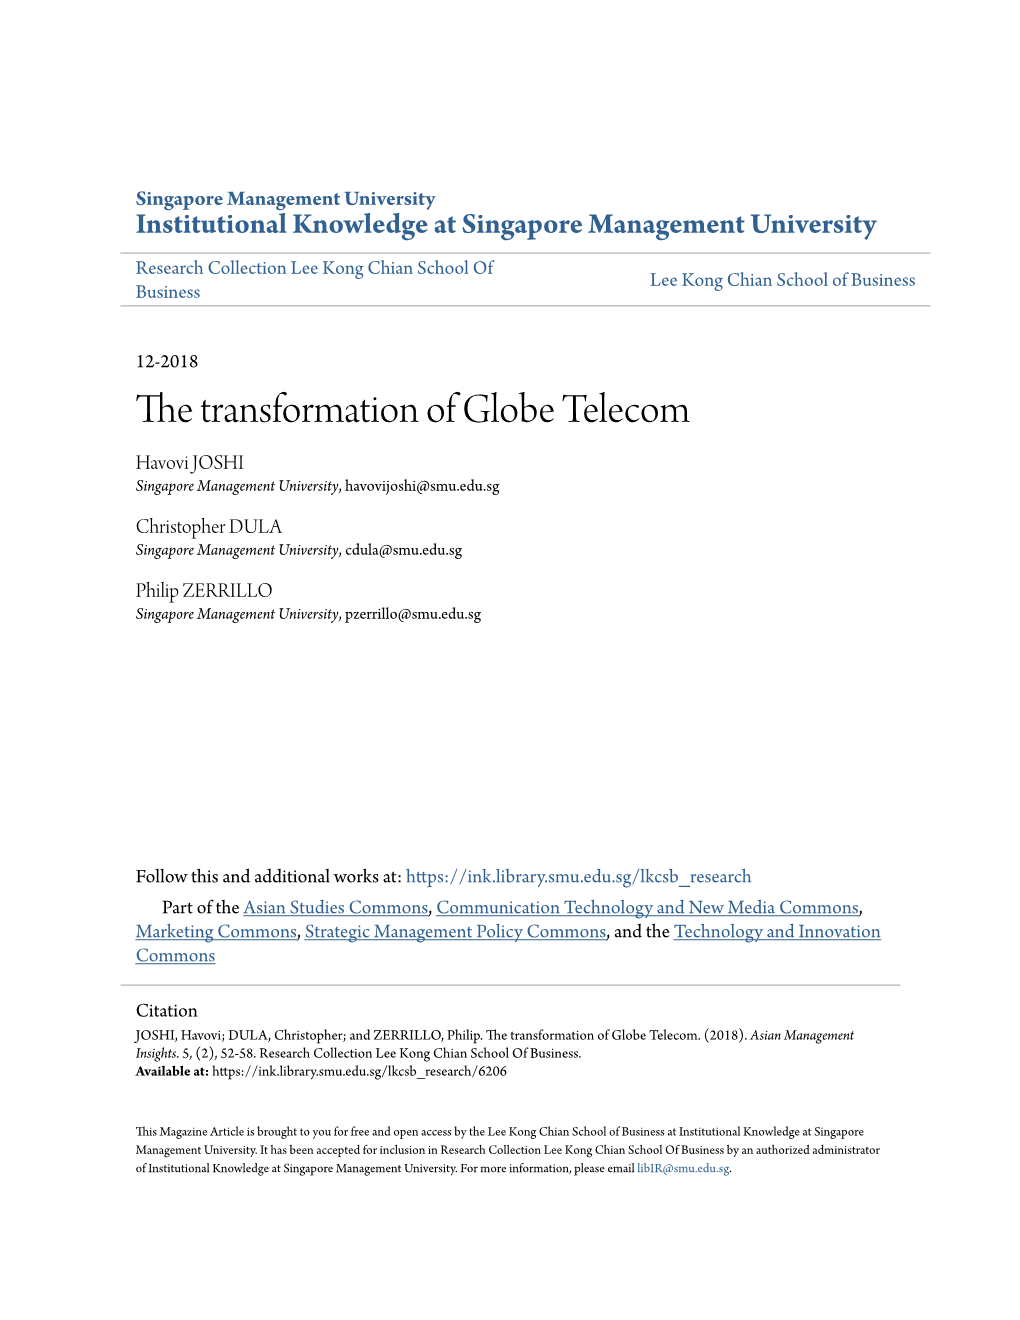 The Transformation of Globe Telecom Havovi JOSHI Singapore Management University, Havovijoshi@Smu.Edu.Sg